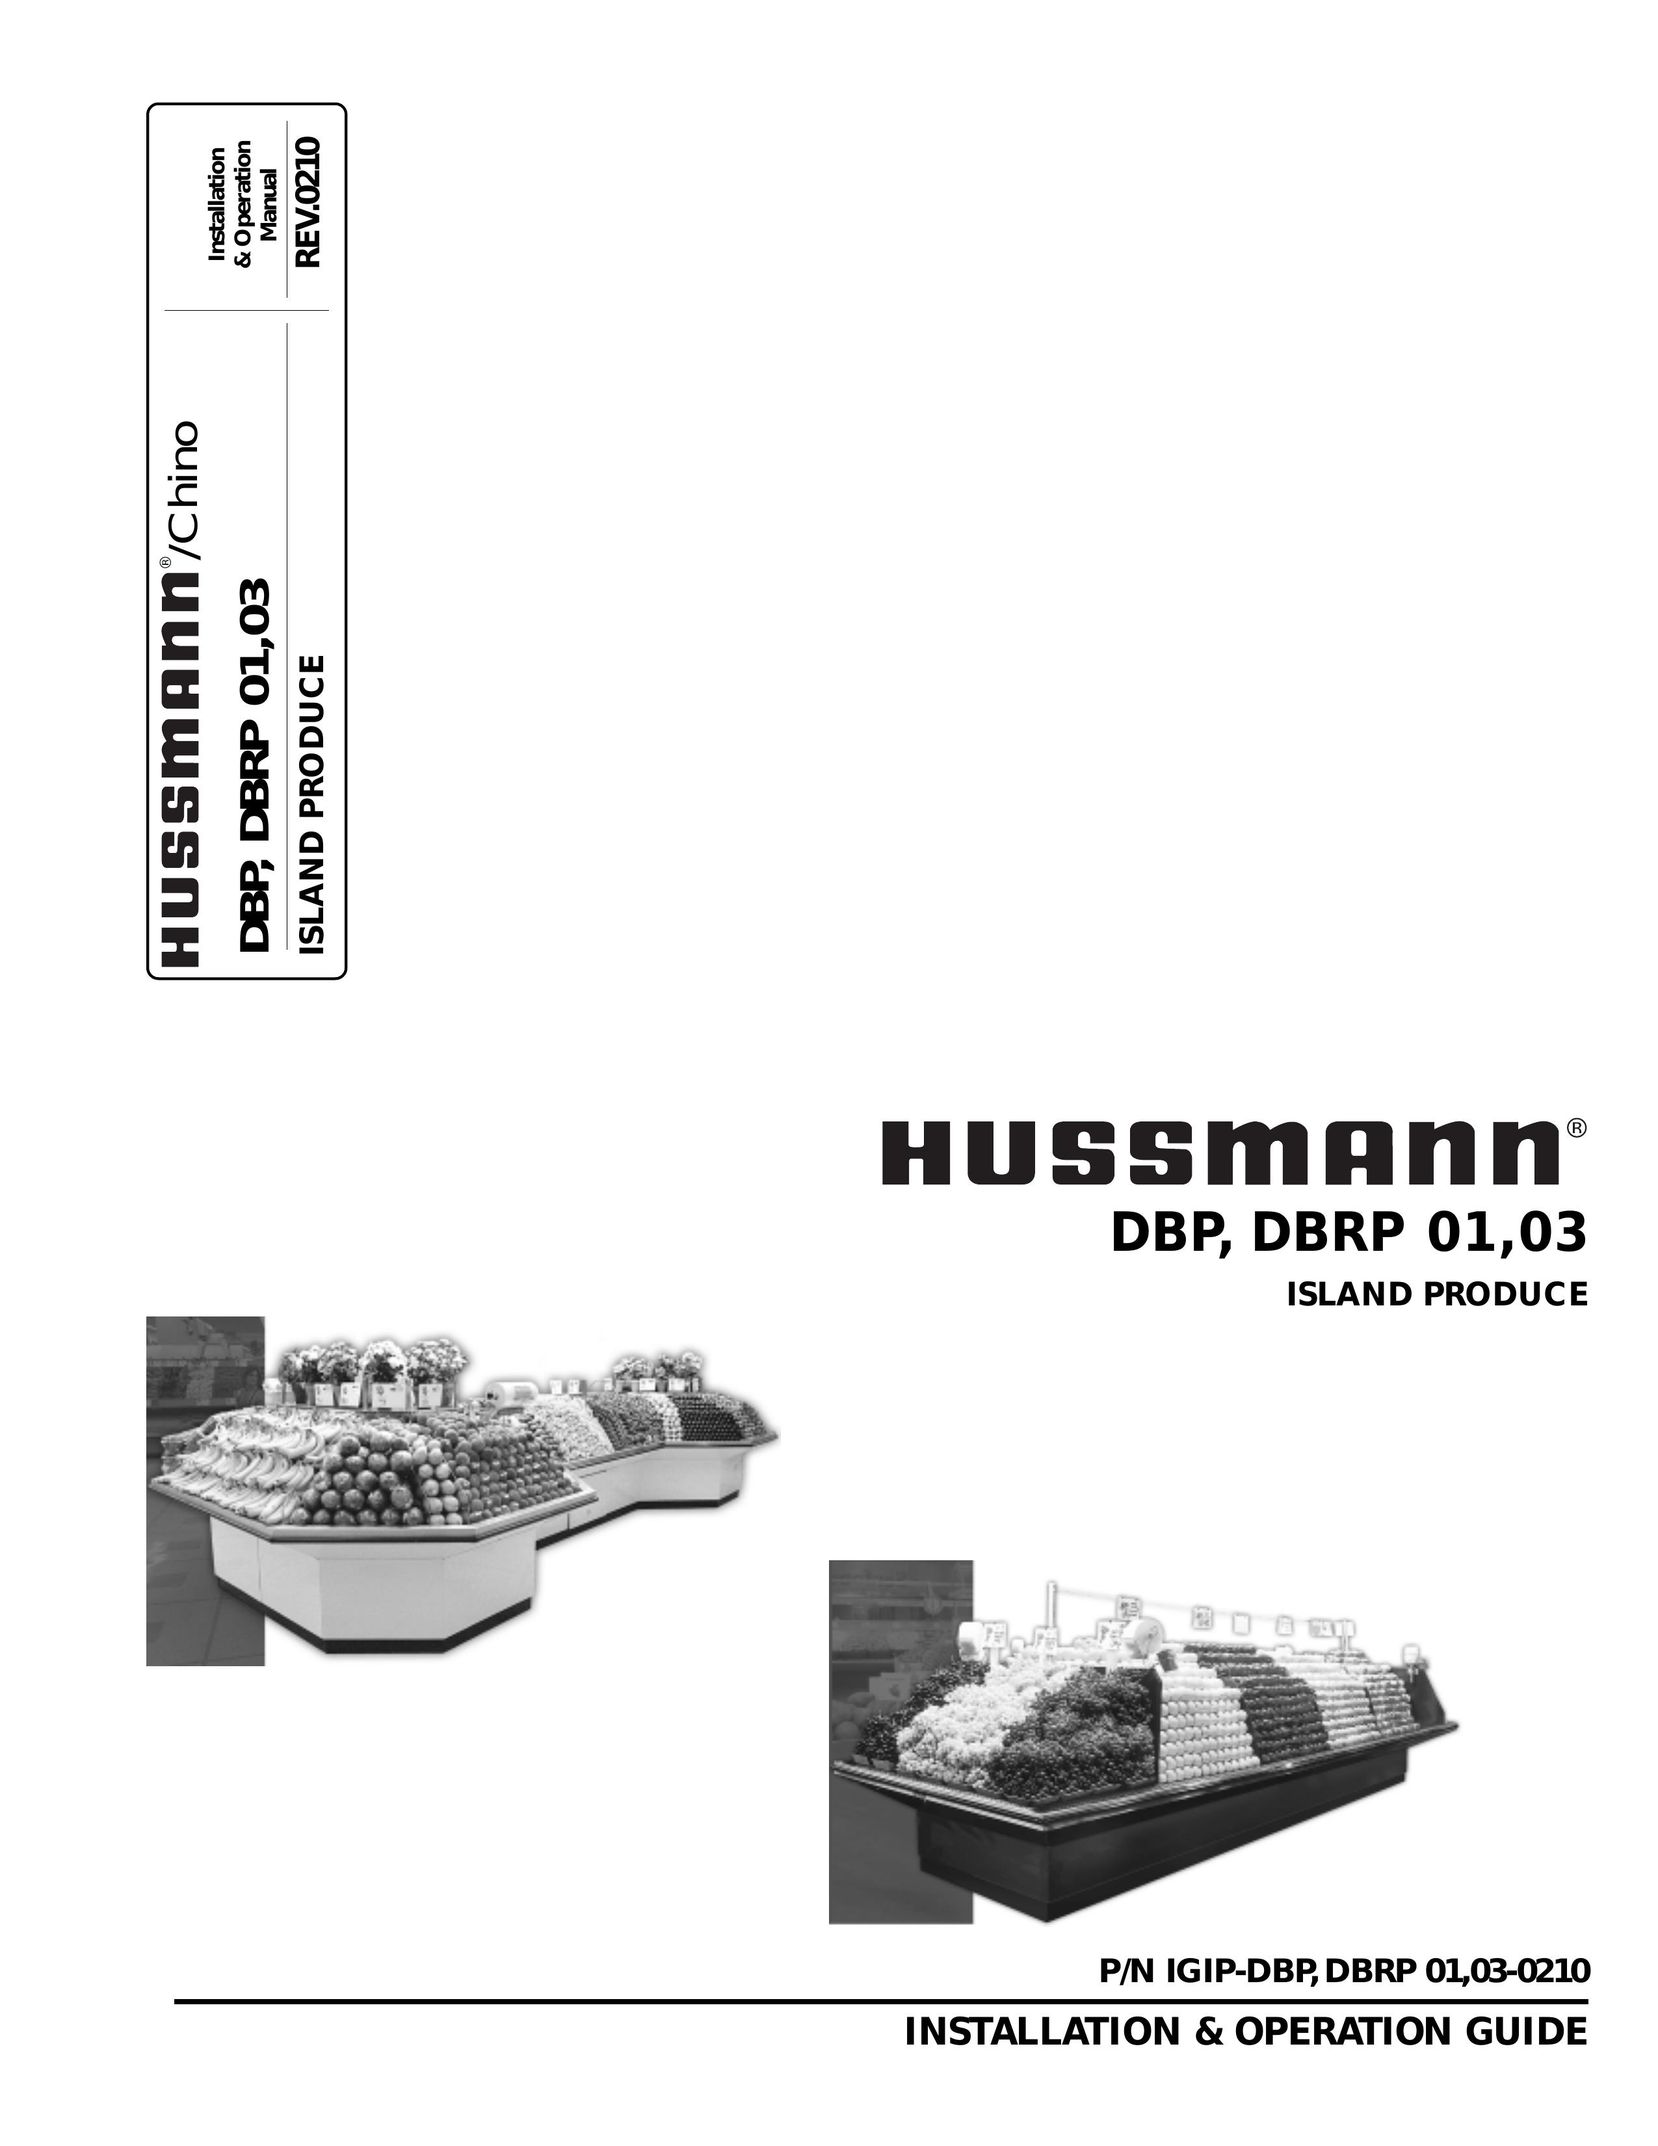 hussman DBRP 01 Ice Maker User Manual